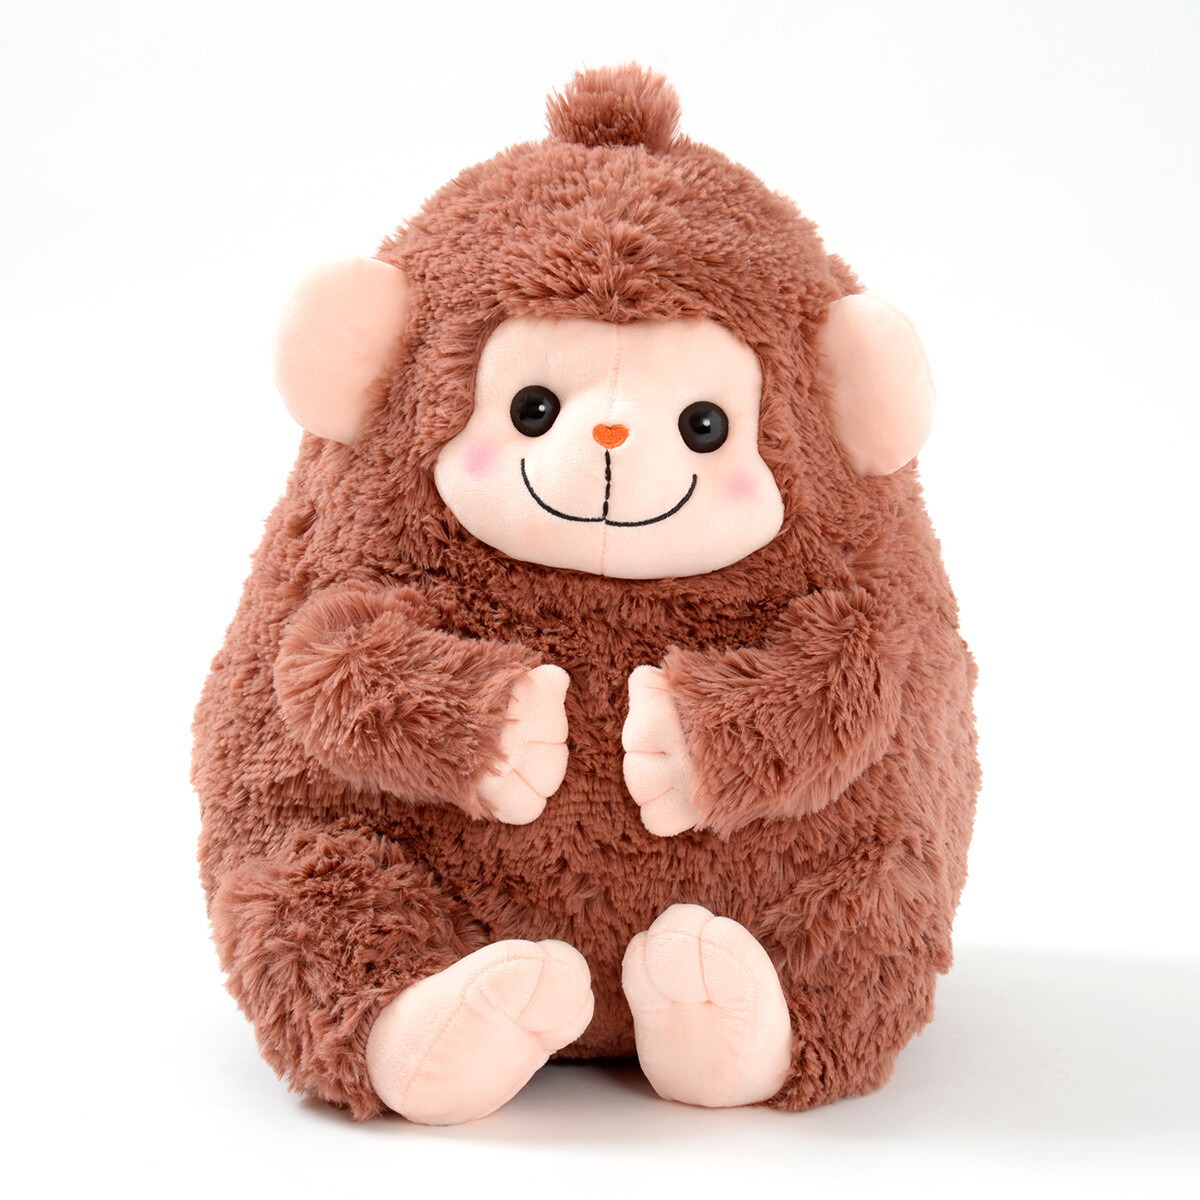 life size monkey stuffed animal